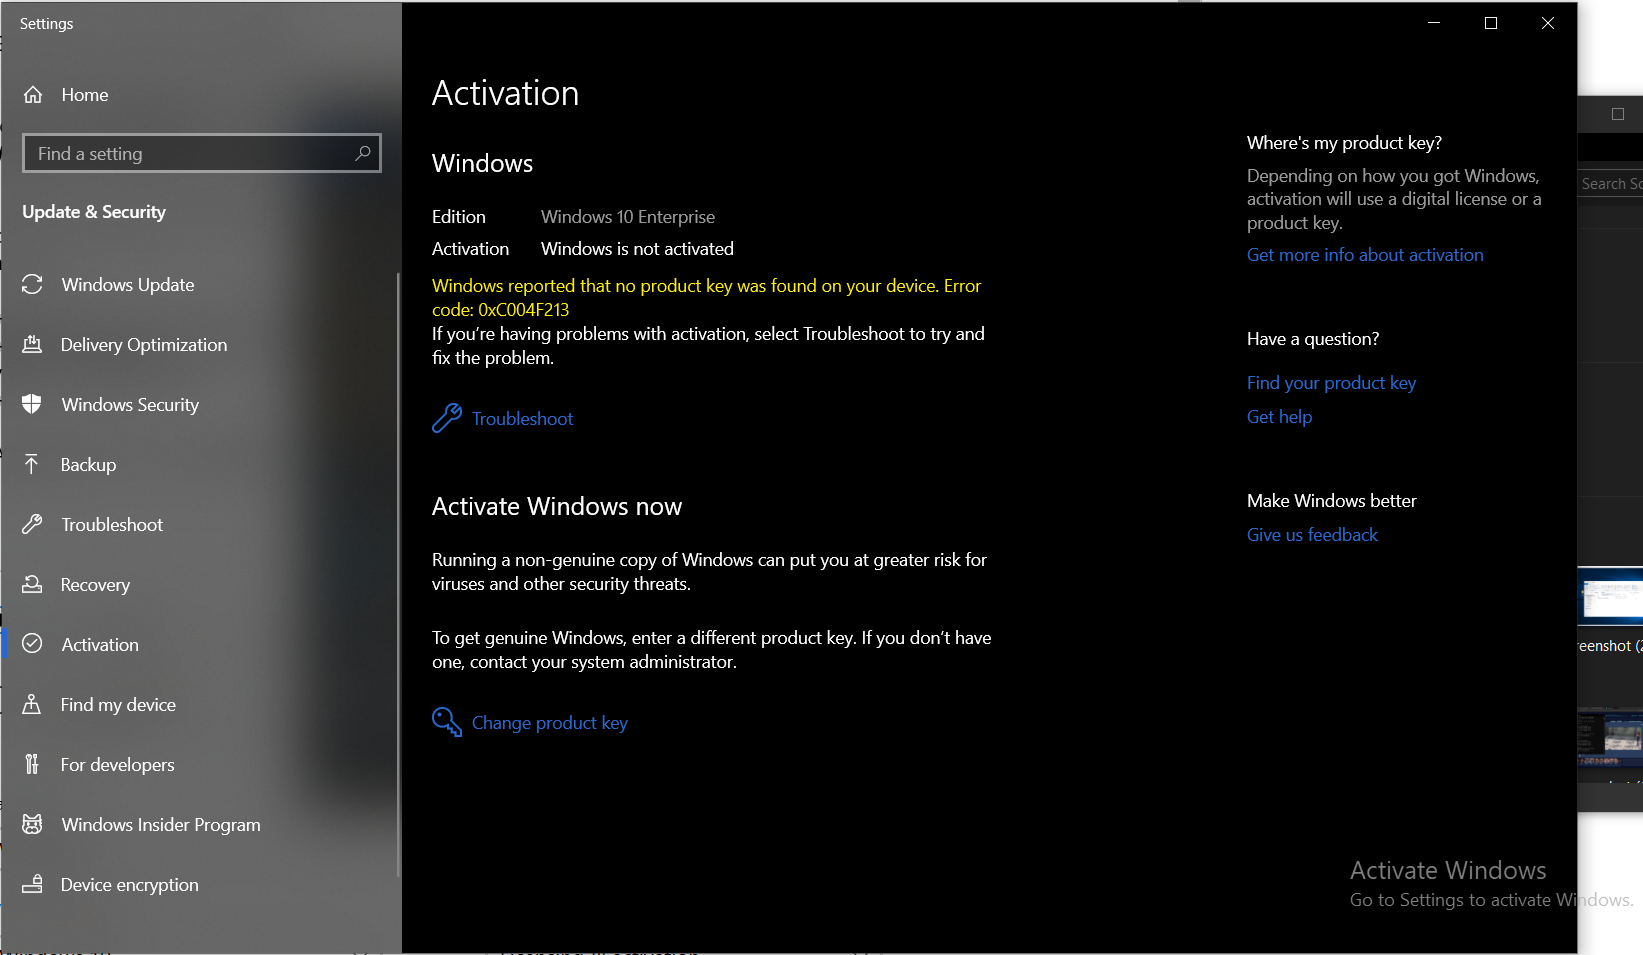 Windows 10 Pro Digital License Activation not working b7146042-4db4-4b13-9bdd-90a8618be463?upload=true.png